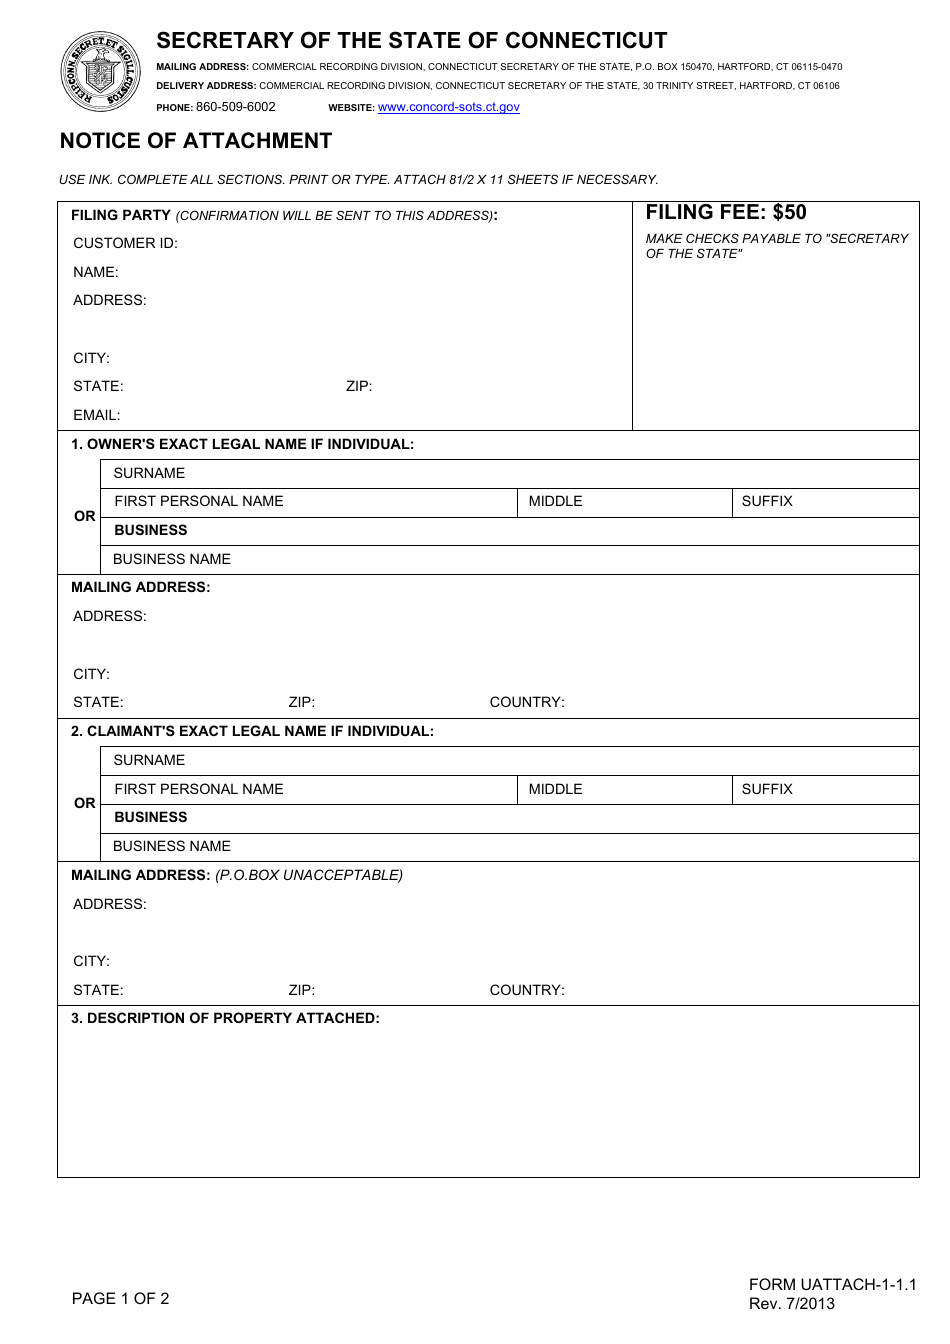 Form UATTACH-1-1.1 Notice of Attachment - Connecticut, Page 1